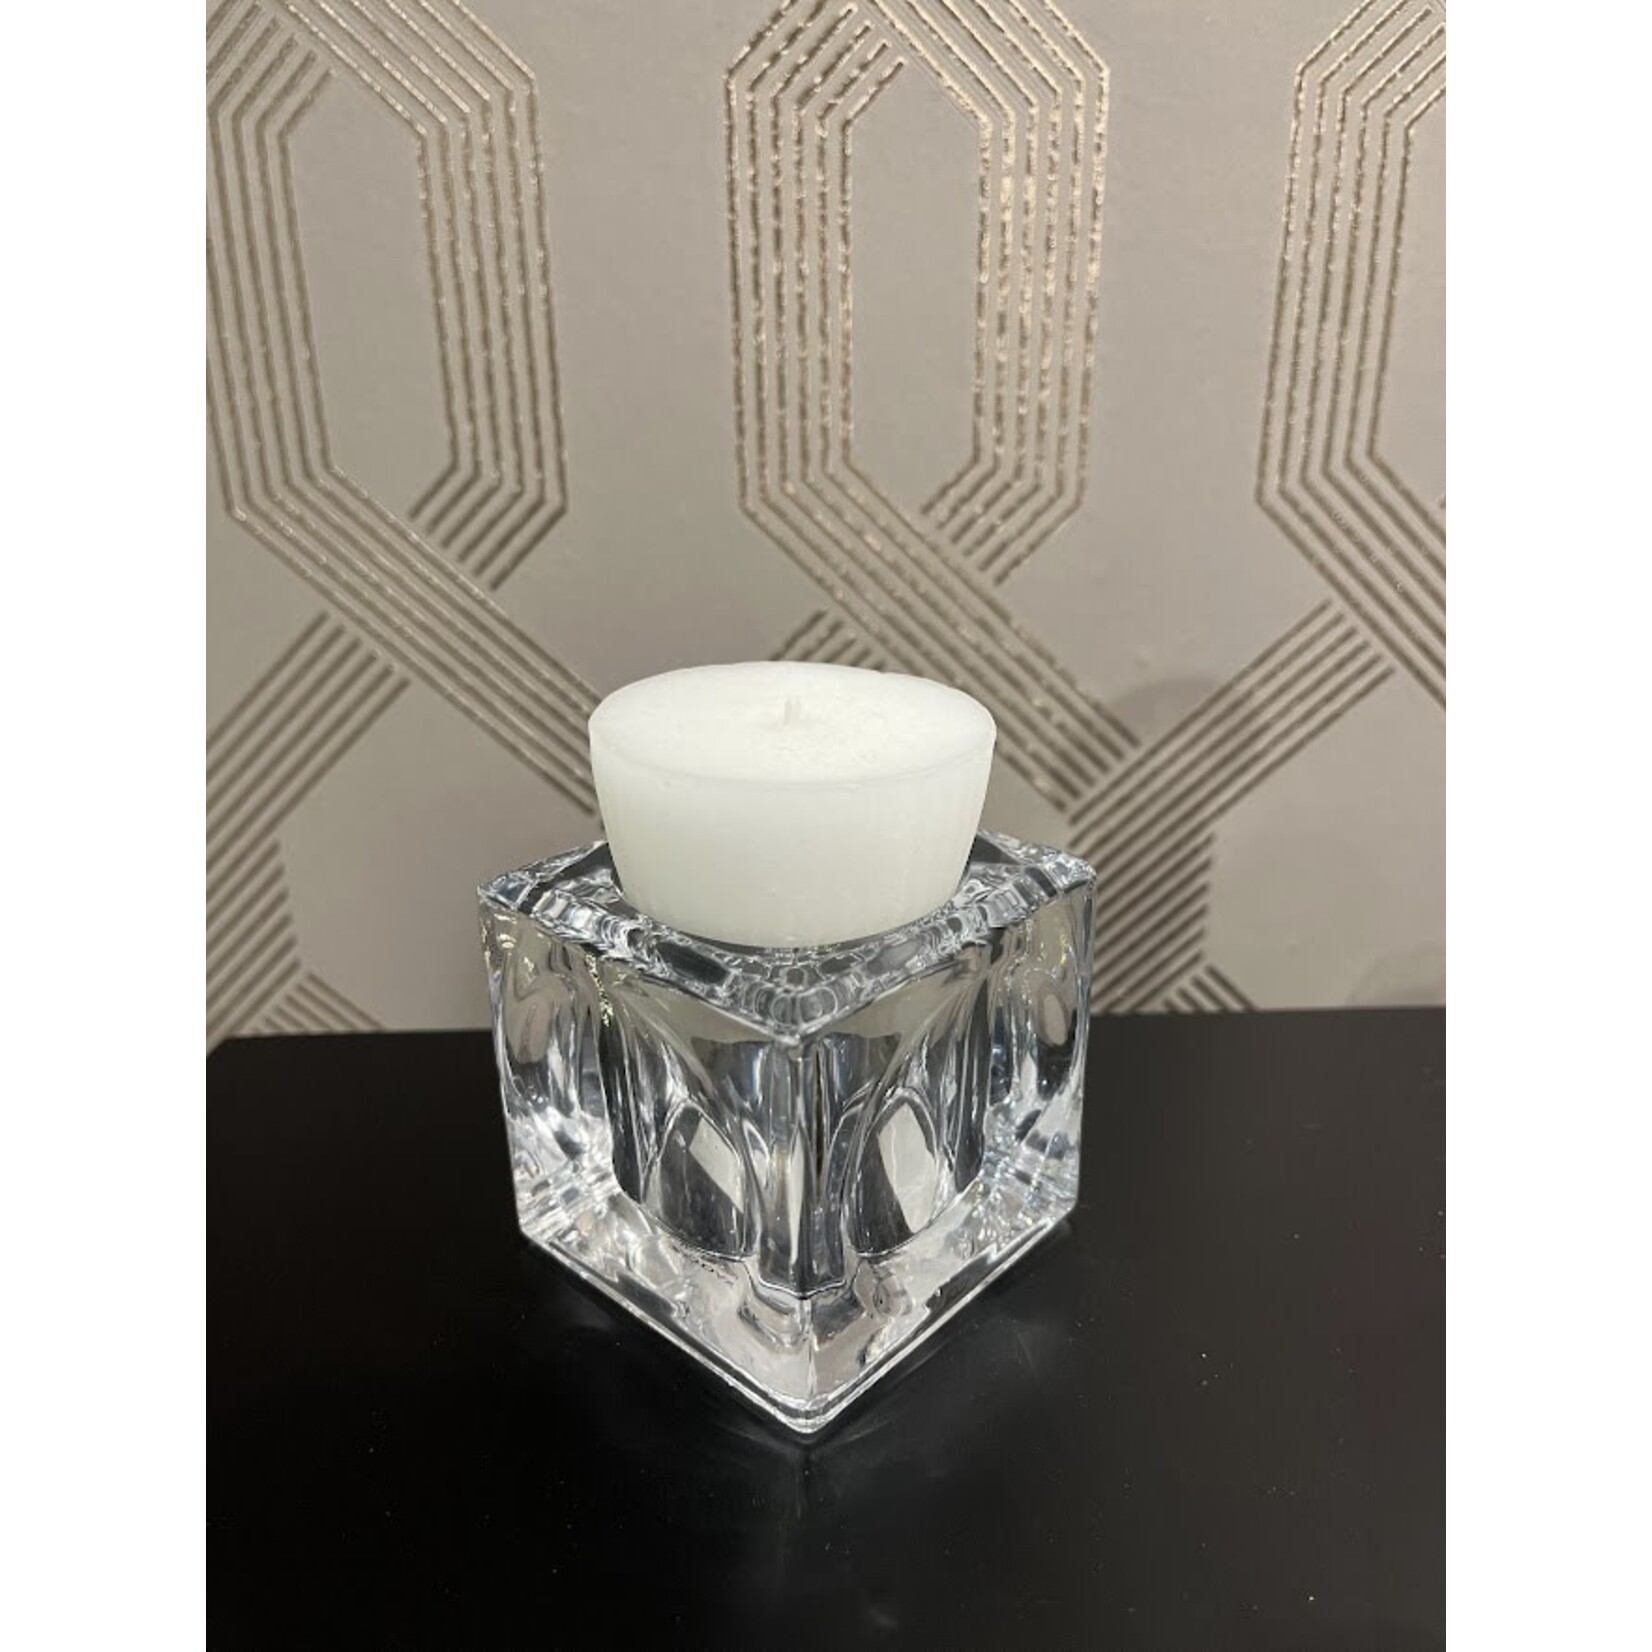 Zodax Cubic Tealight Candleholder Small